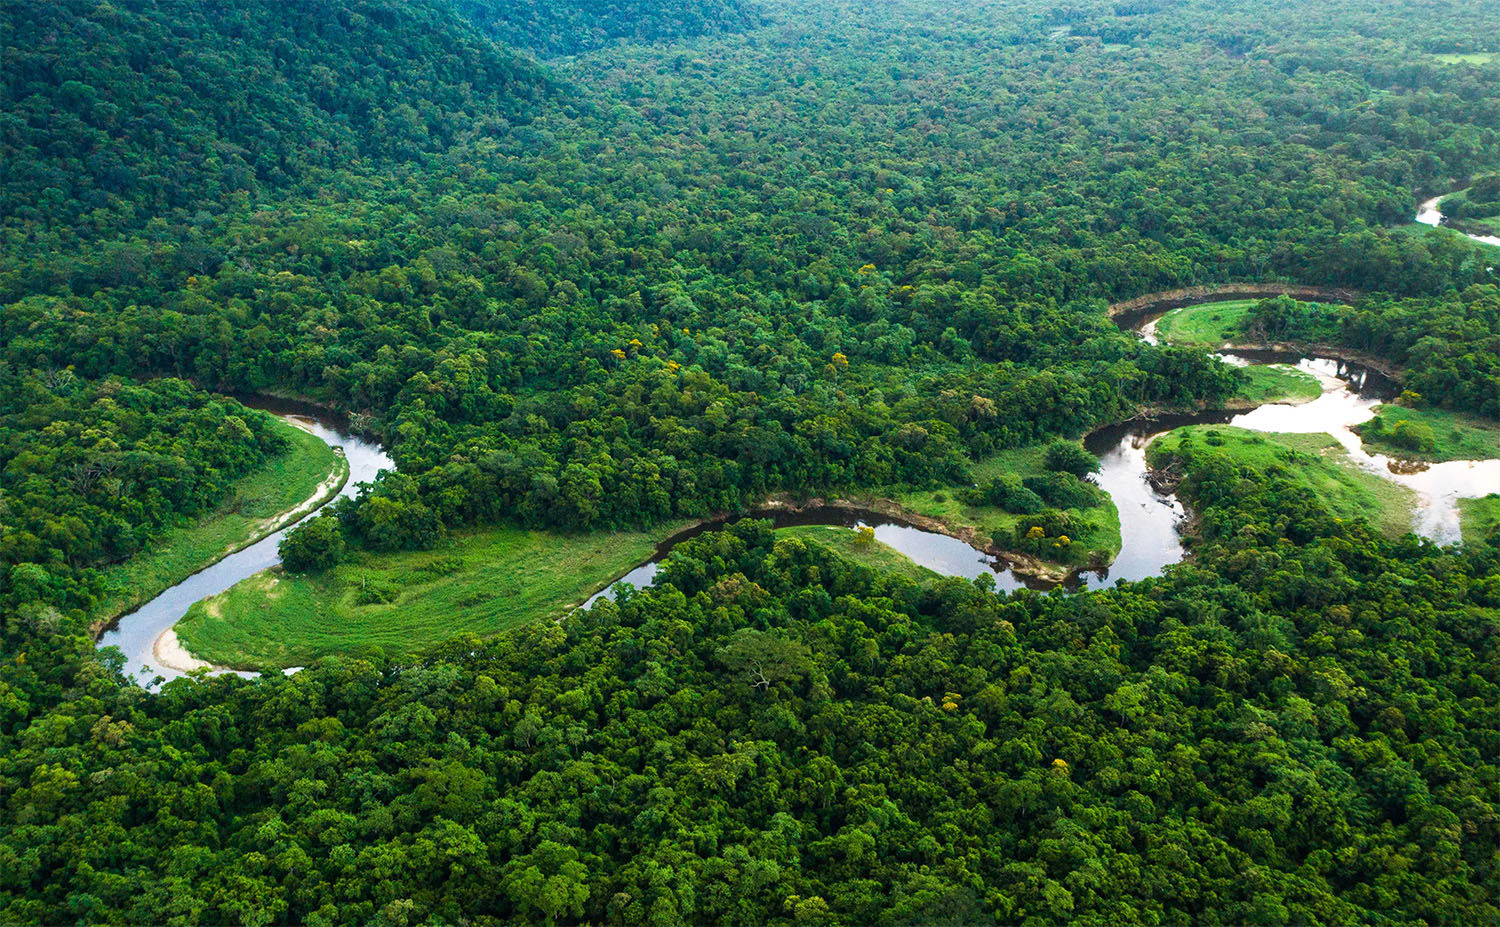 20 interesting facts about Amazon rainforest